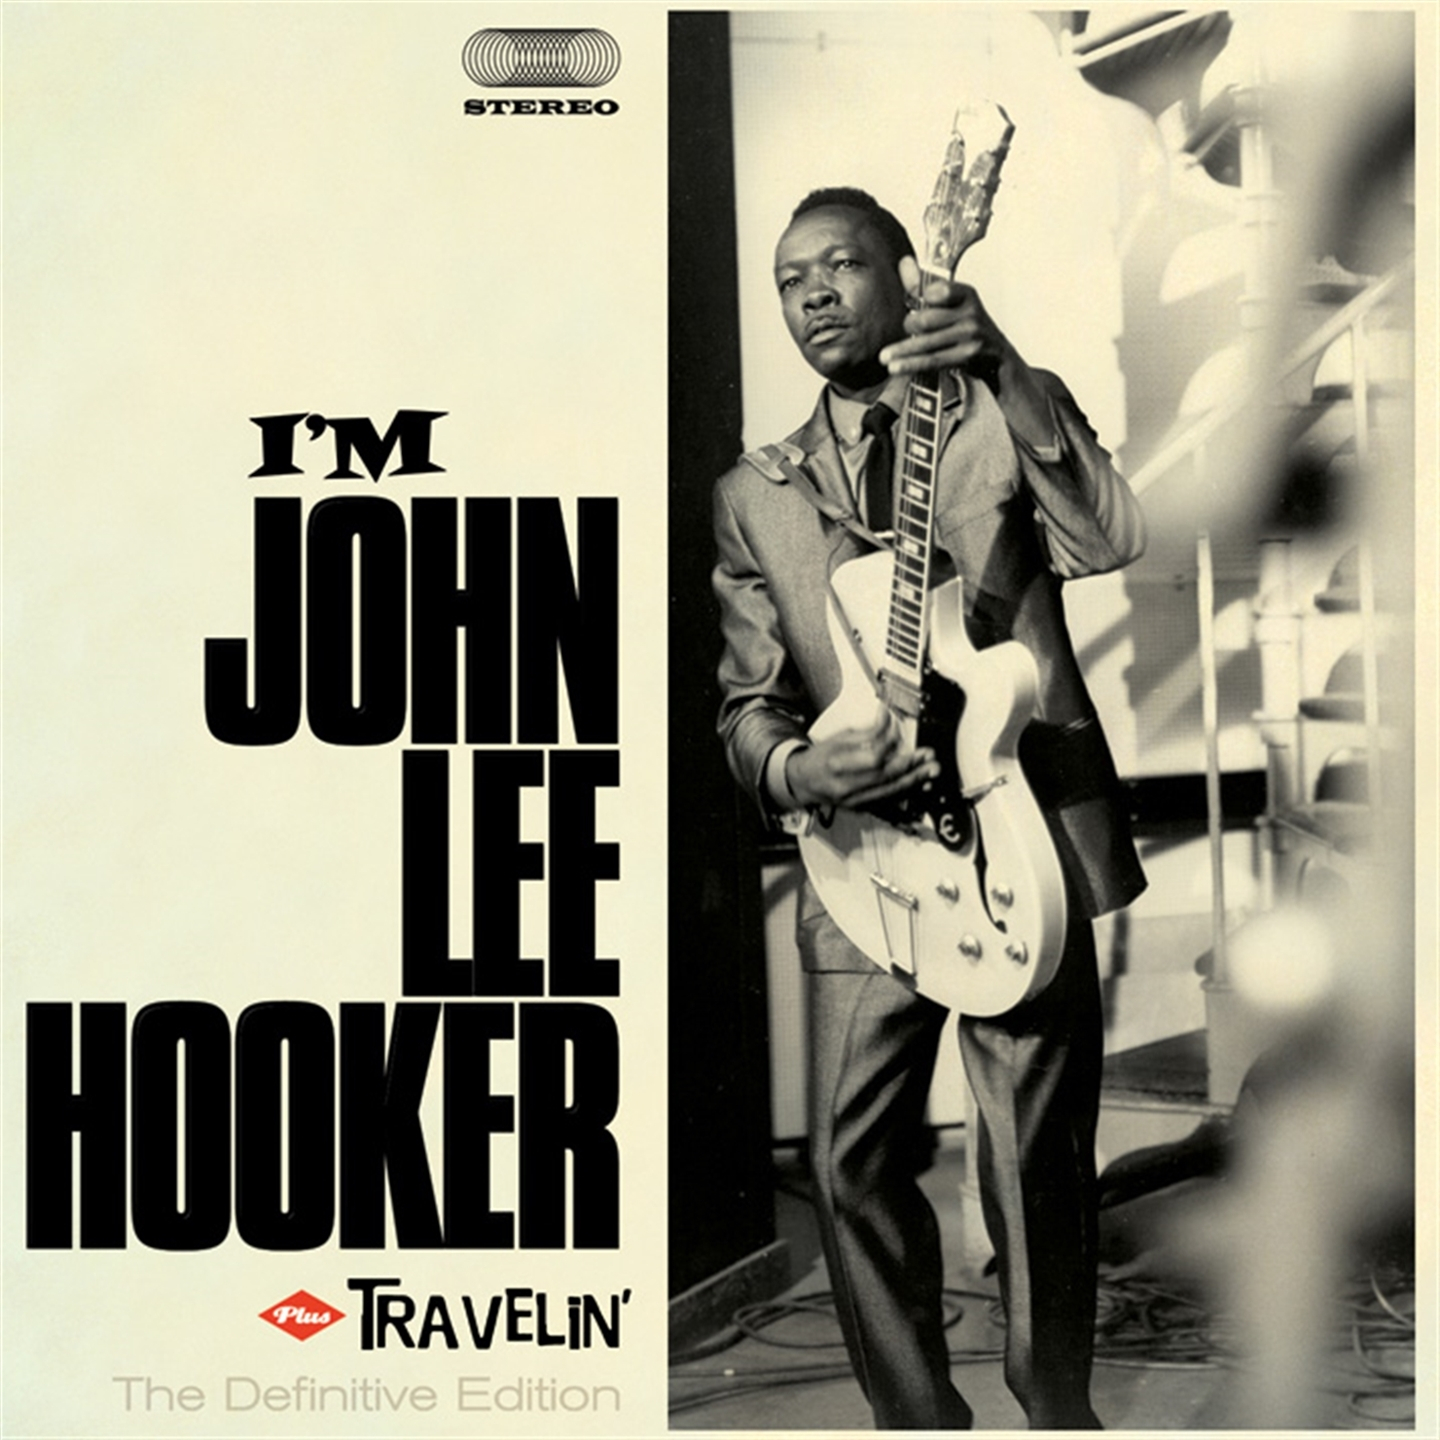 I'M JOHN LEE HOOKER (+ TRAVELIN')